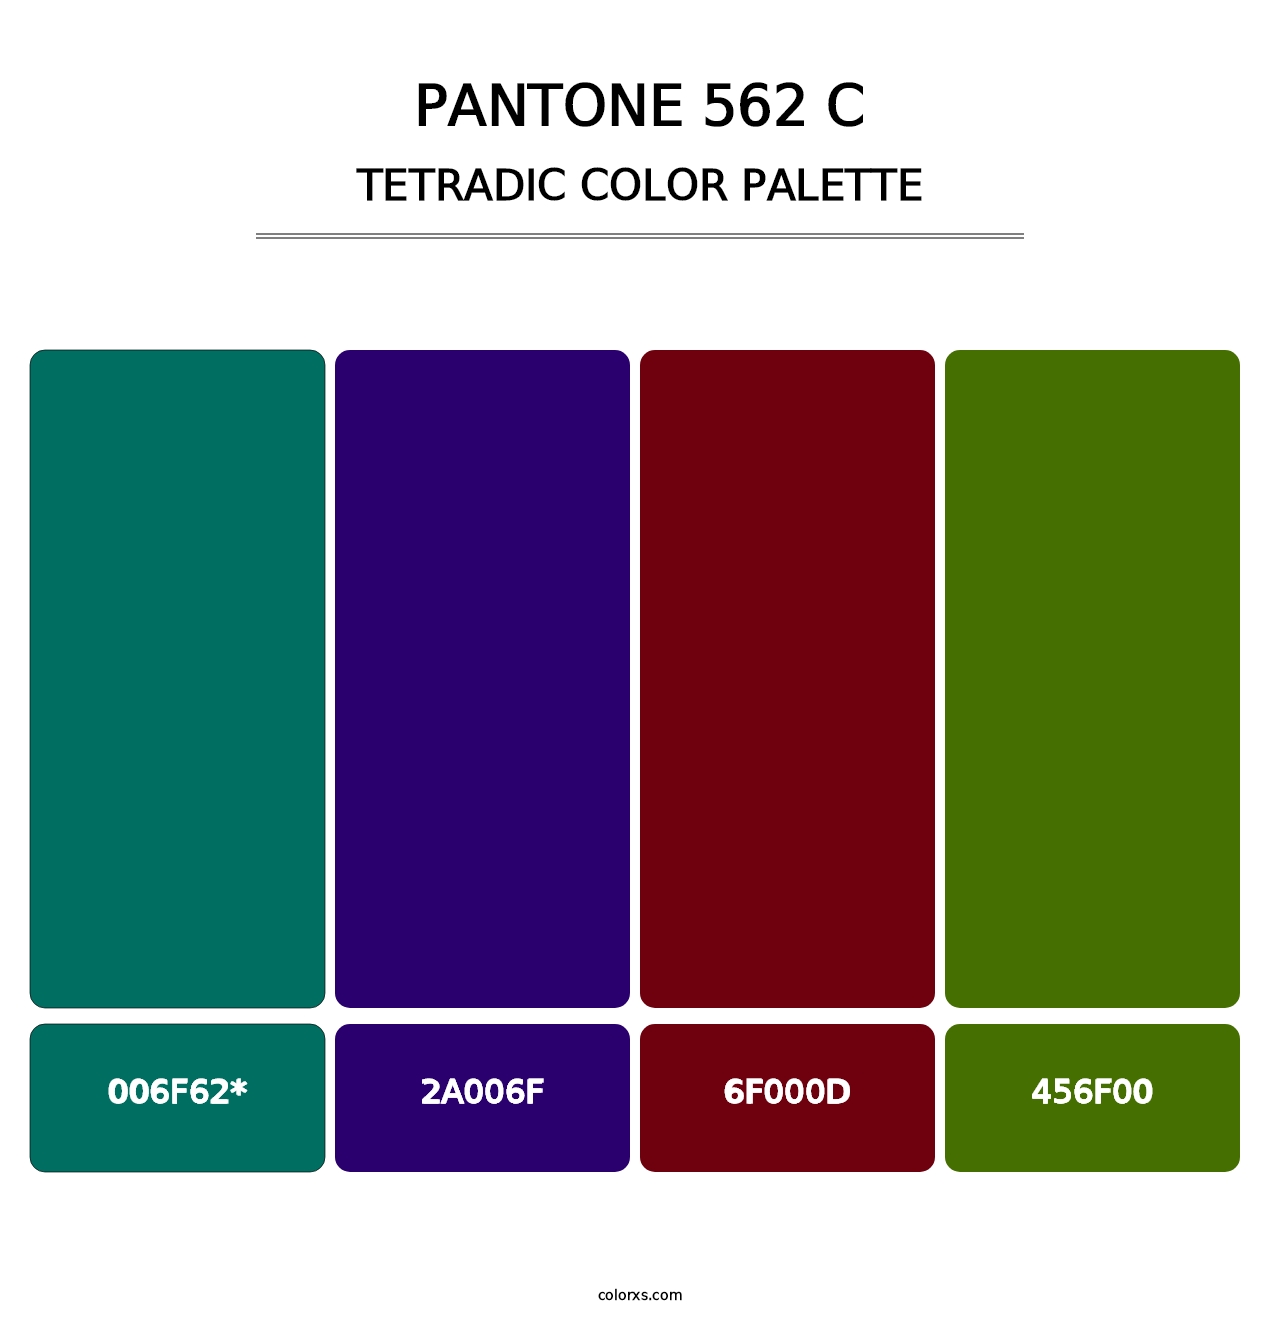 PANTONE 562 C - Tetradic Color Palette